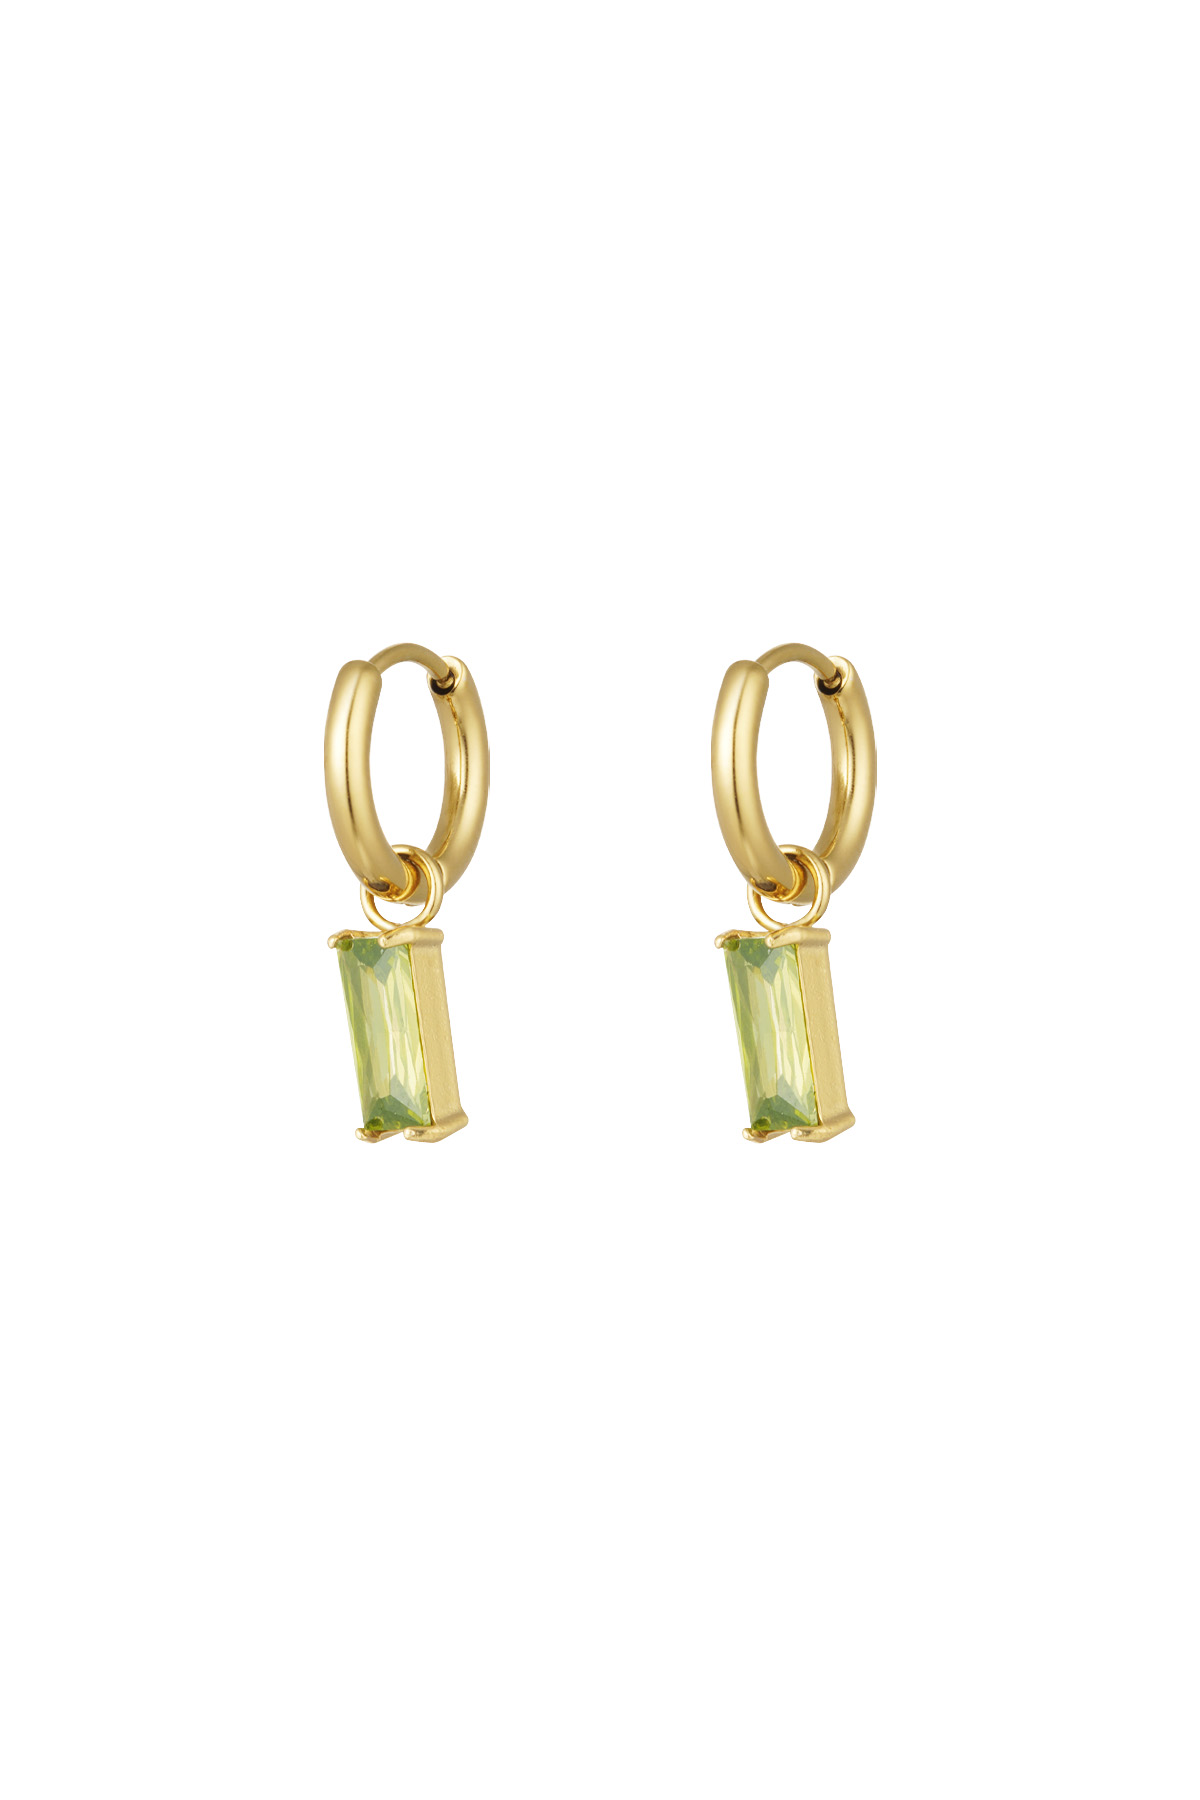 Earrings elongated stone - gold/green h5 